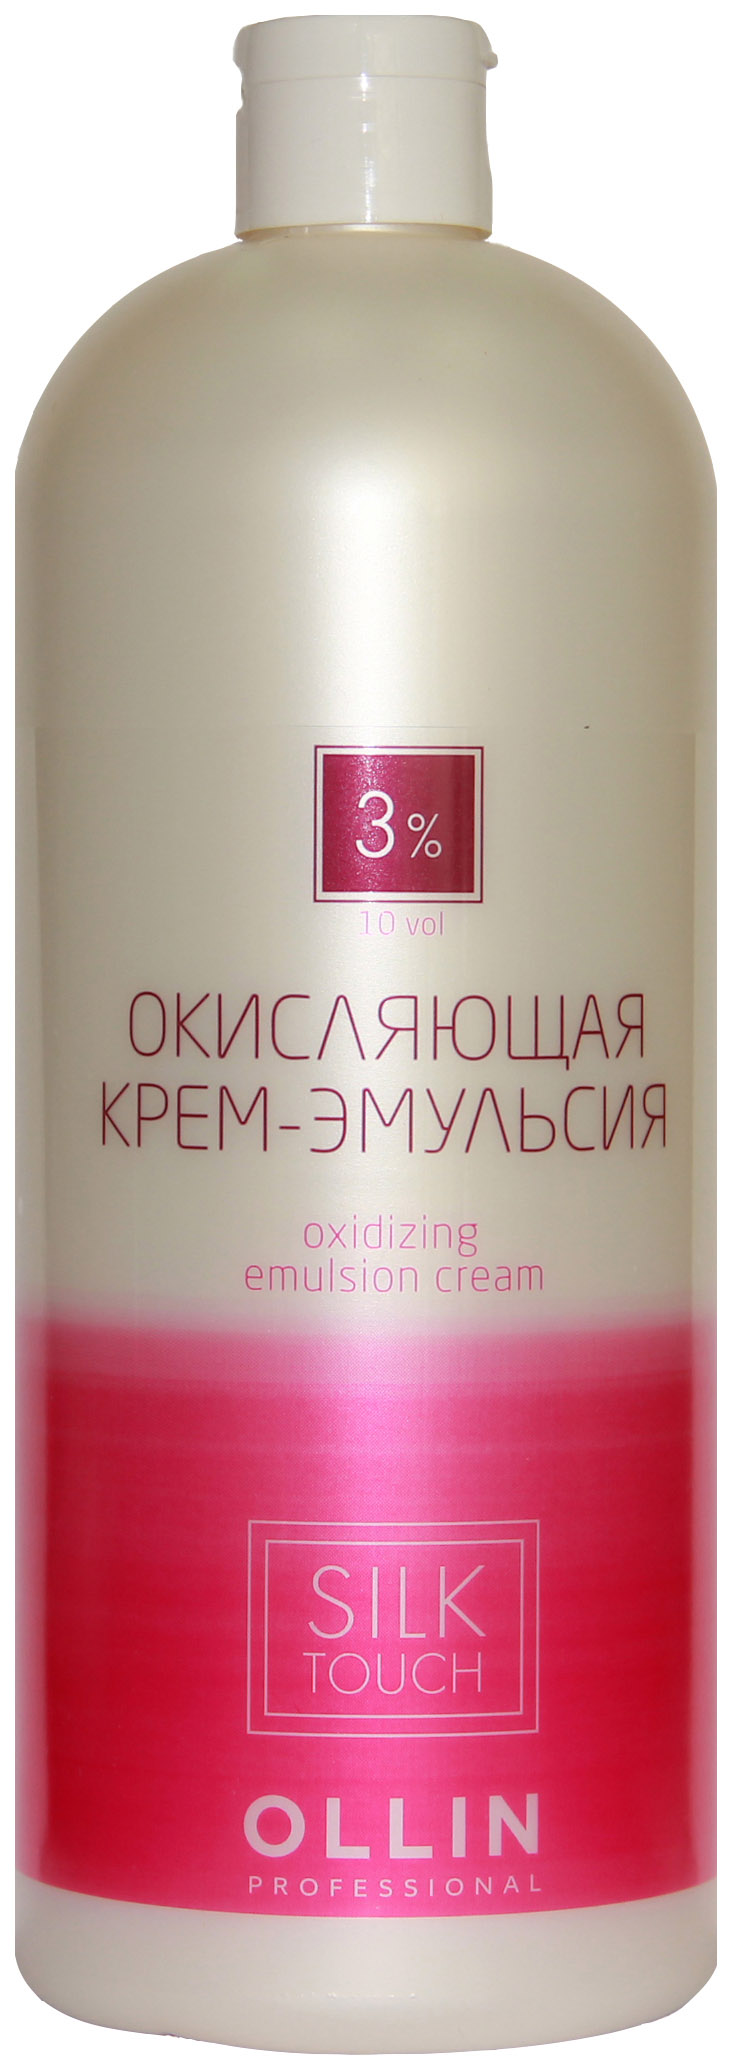 Проявитель Ollin Professional Silk Touch 3% 1000 мл бутылка мастер спорта 1000 мл